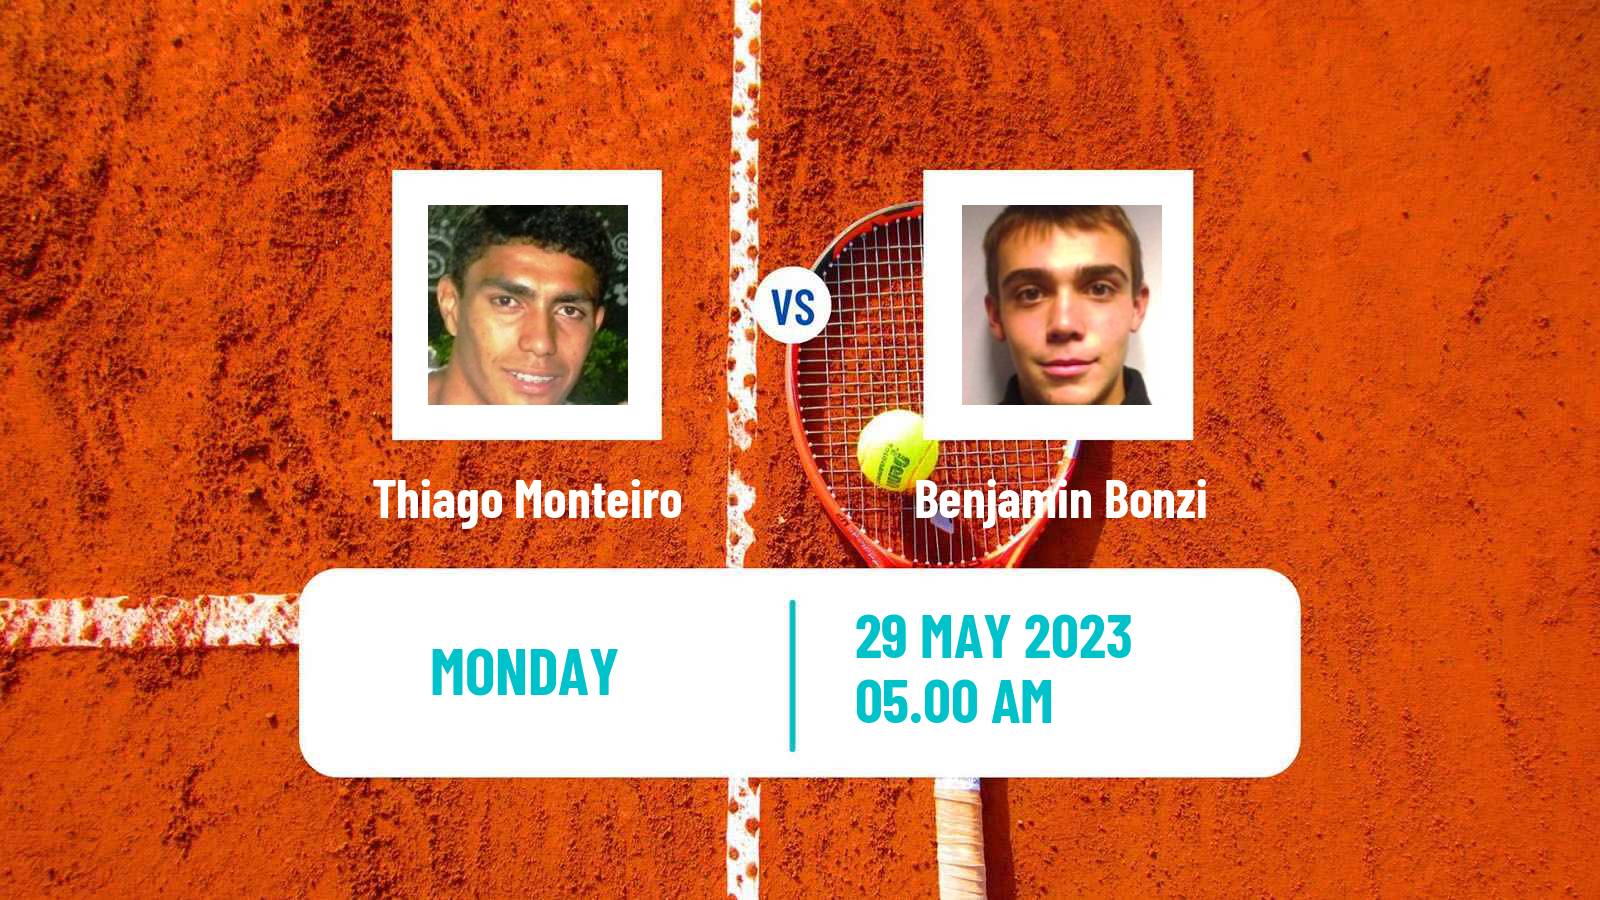 Tennis ATP Roland Garros Thiago Monteiro - Benjamin Bonzi